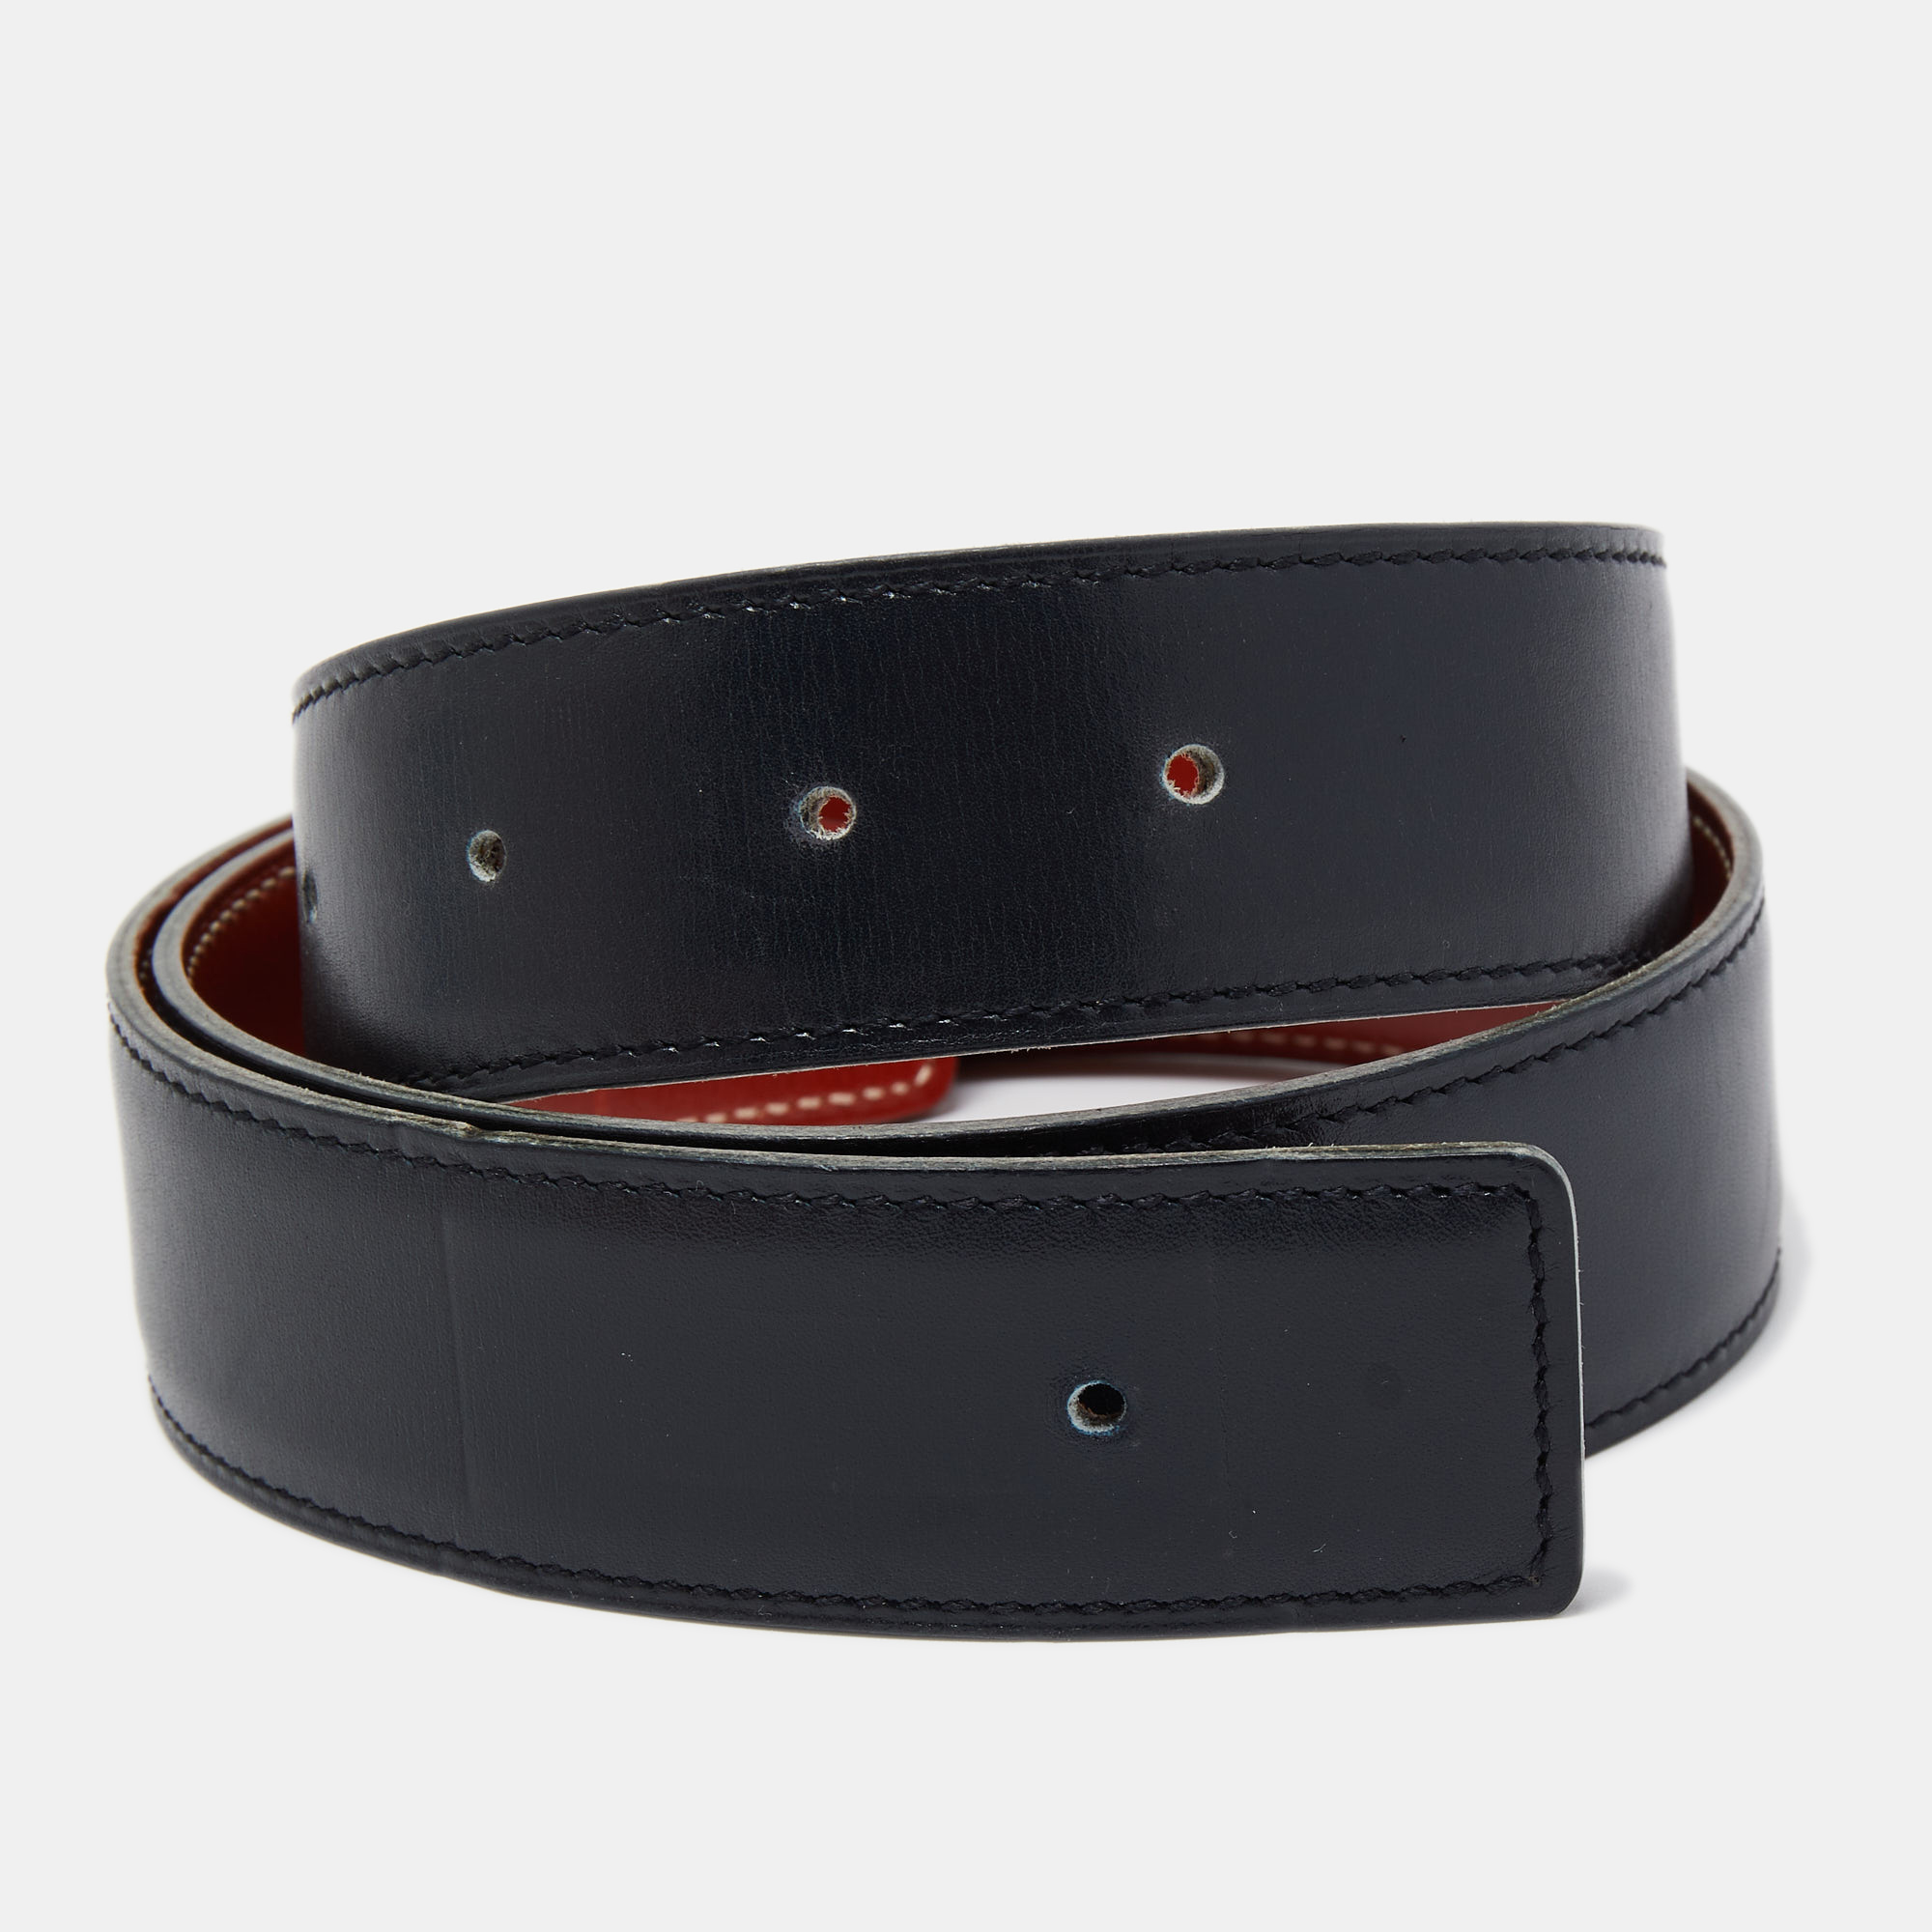 Hermes herm&egrave;s bleu marine box leather belt strap 75cm